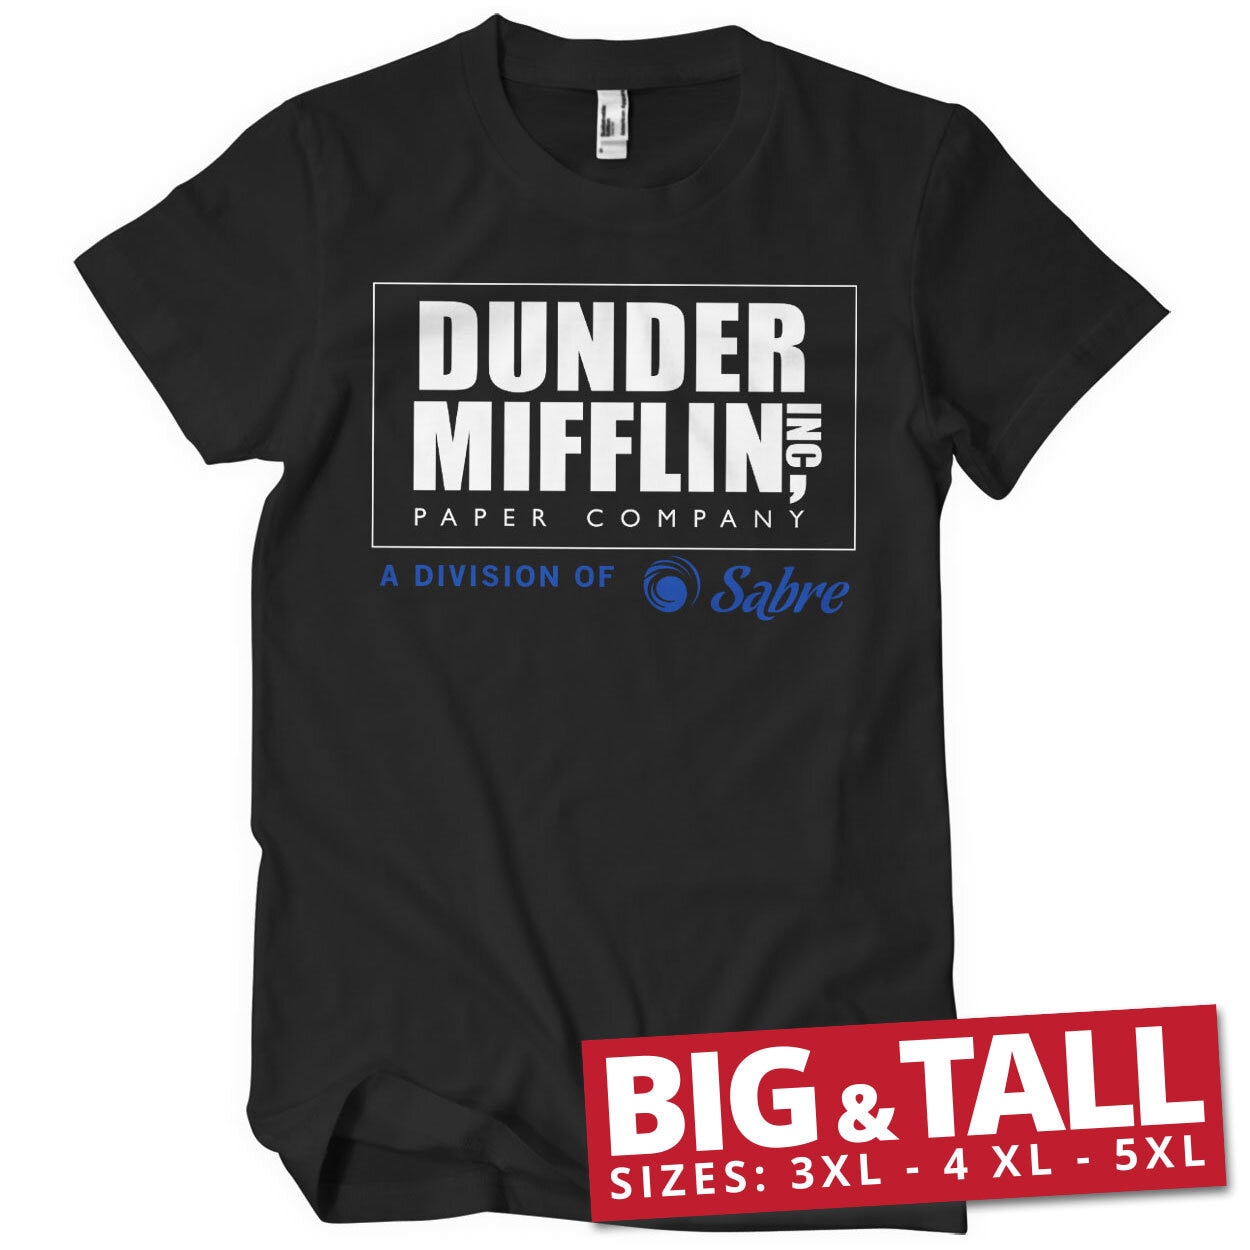 Dunder Mifflin - Division of Sabre Big & Tall T-Shirt